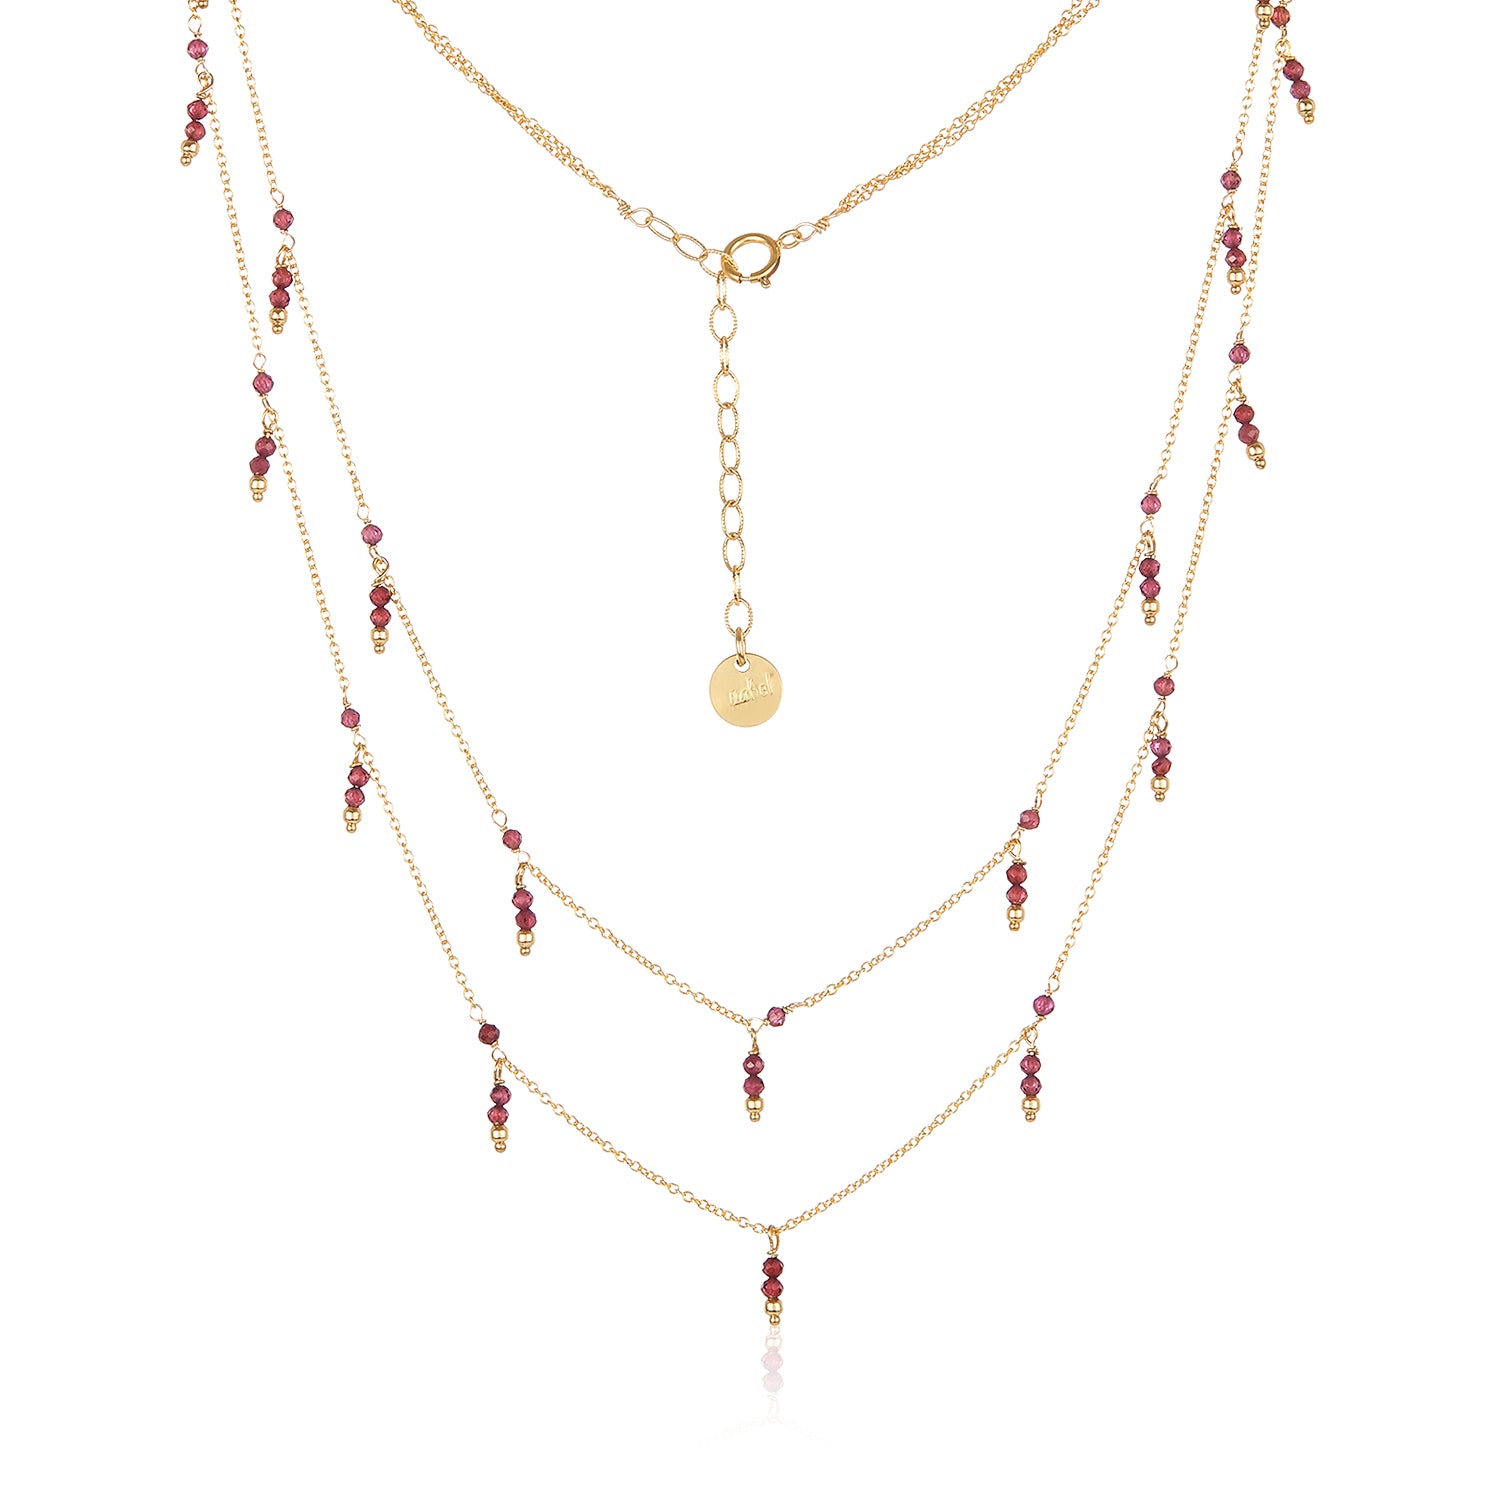 Dangling Double Strand Necklace - Garnet